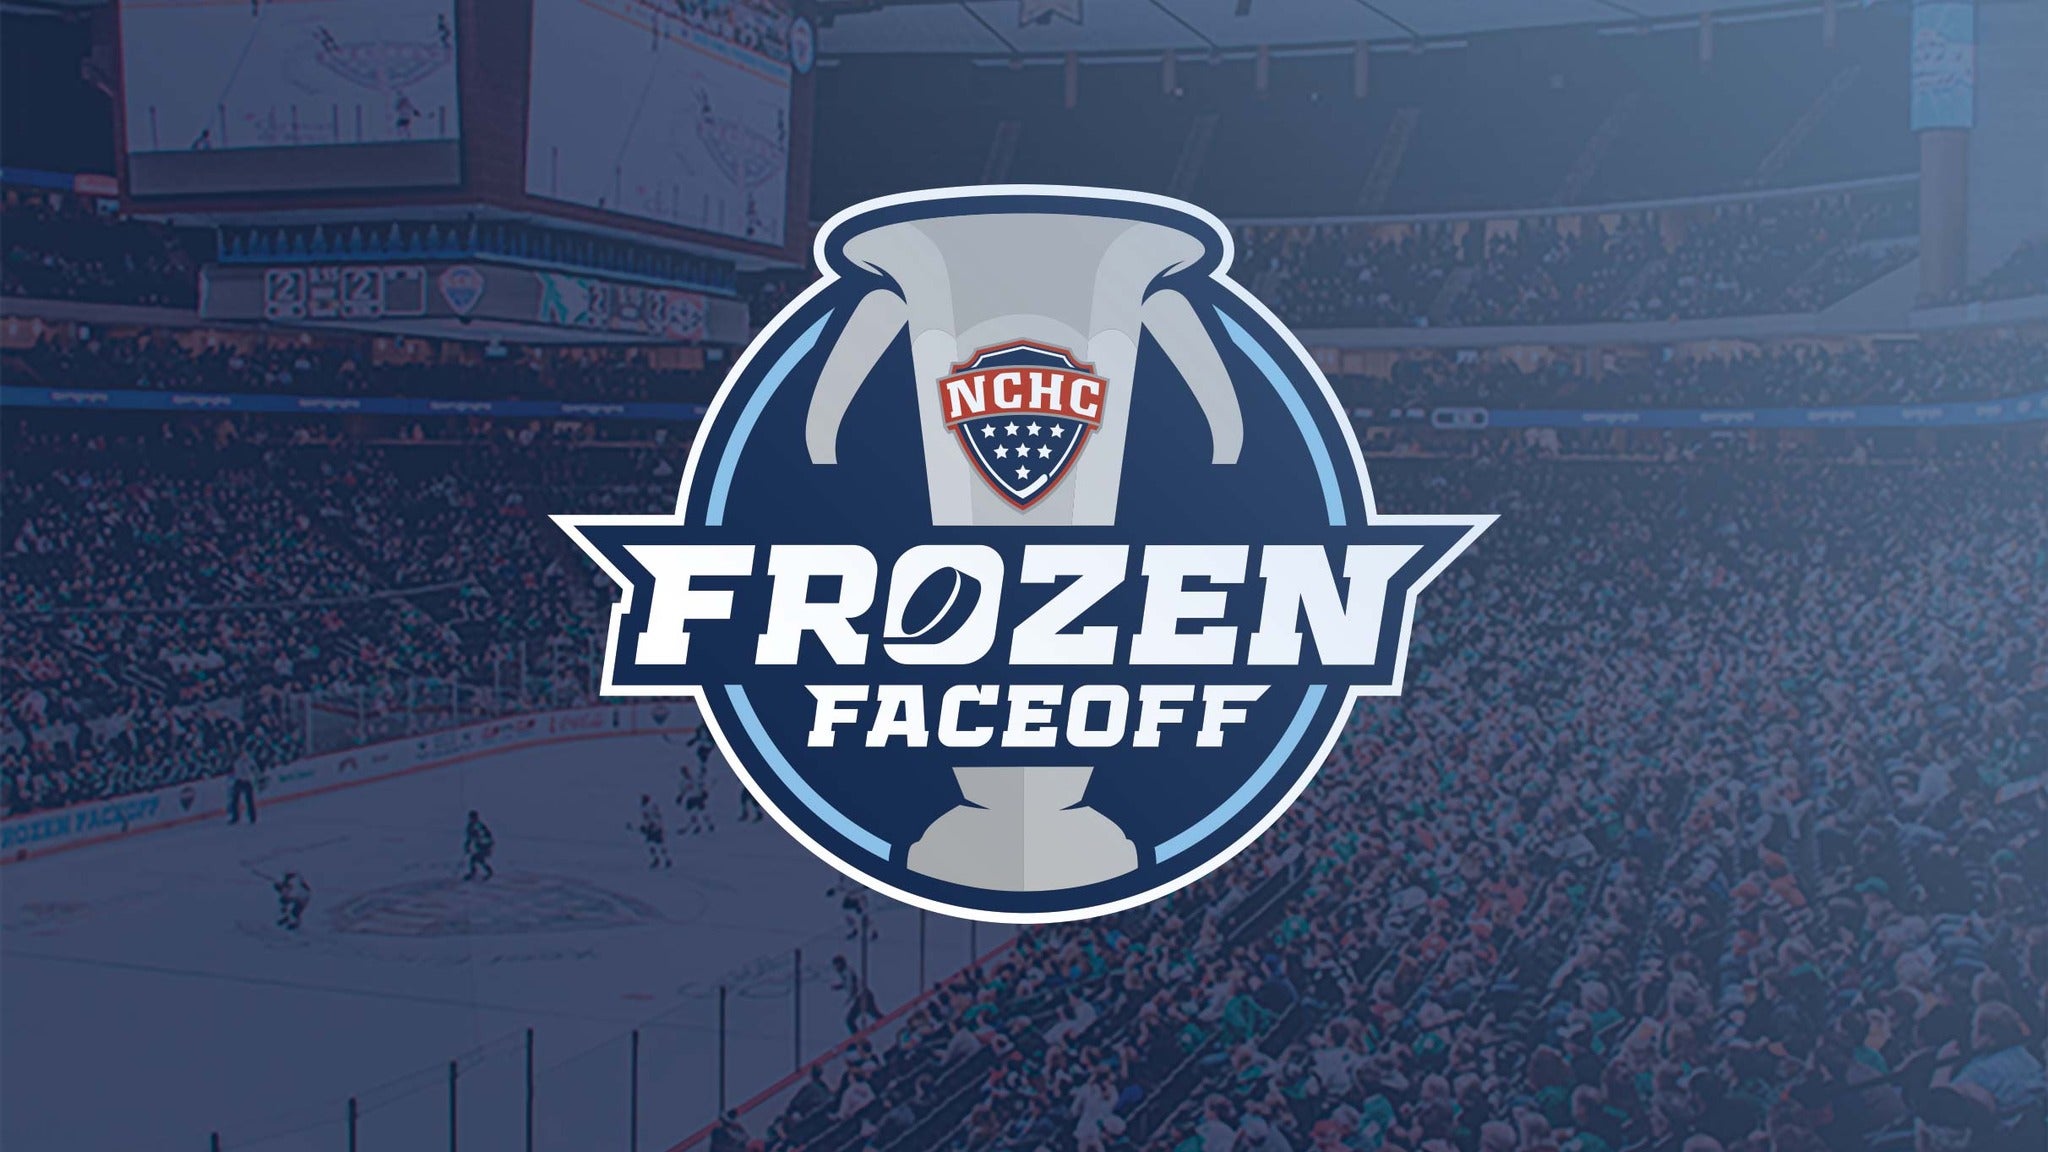 NCHC College Hockey Frozen Faceoff presale information on freepresalepasswords.com